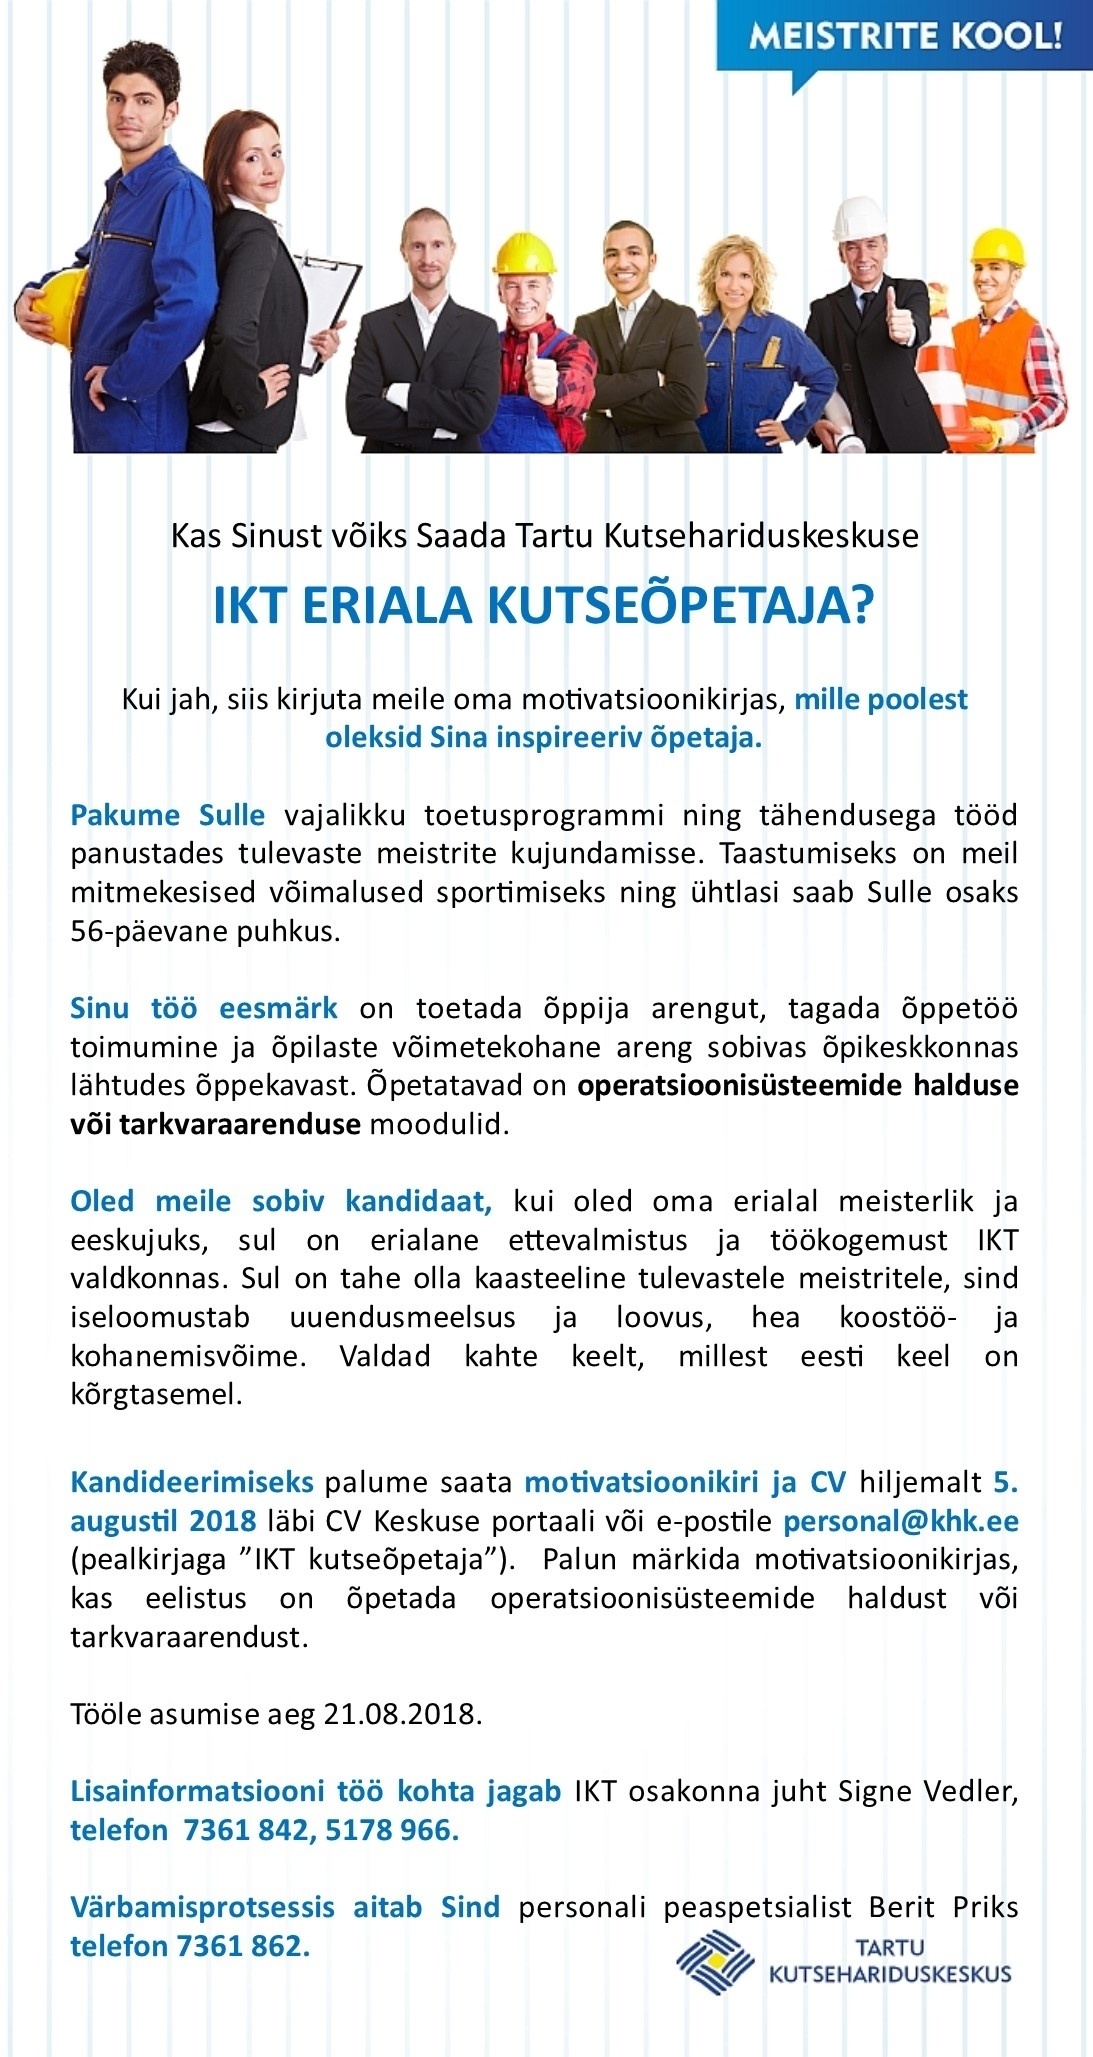 Tartu Kutsehariduskeskus IKT kutseõpetaja